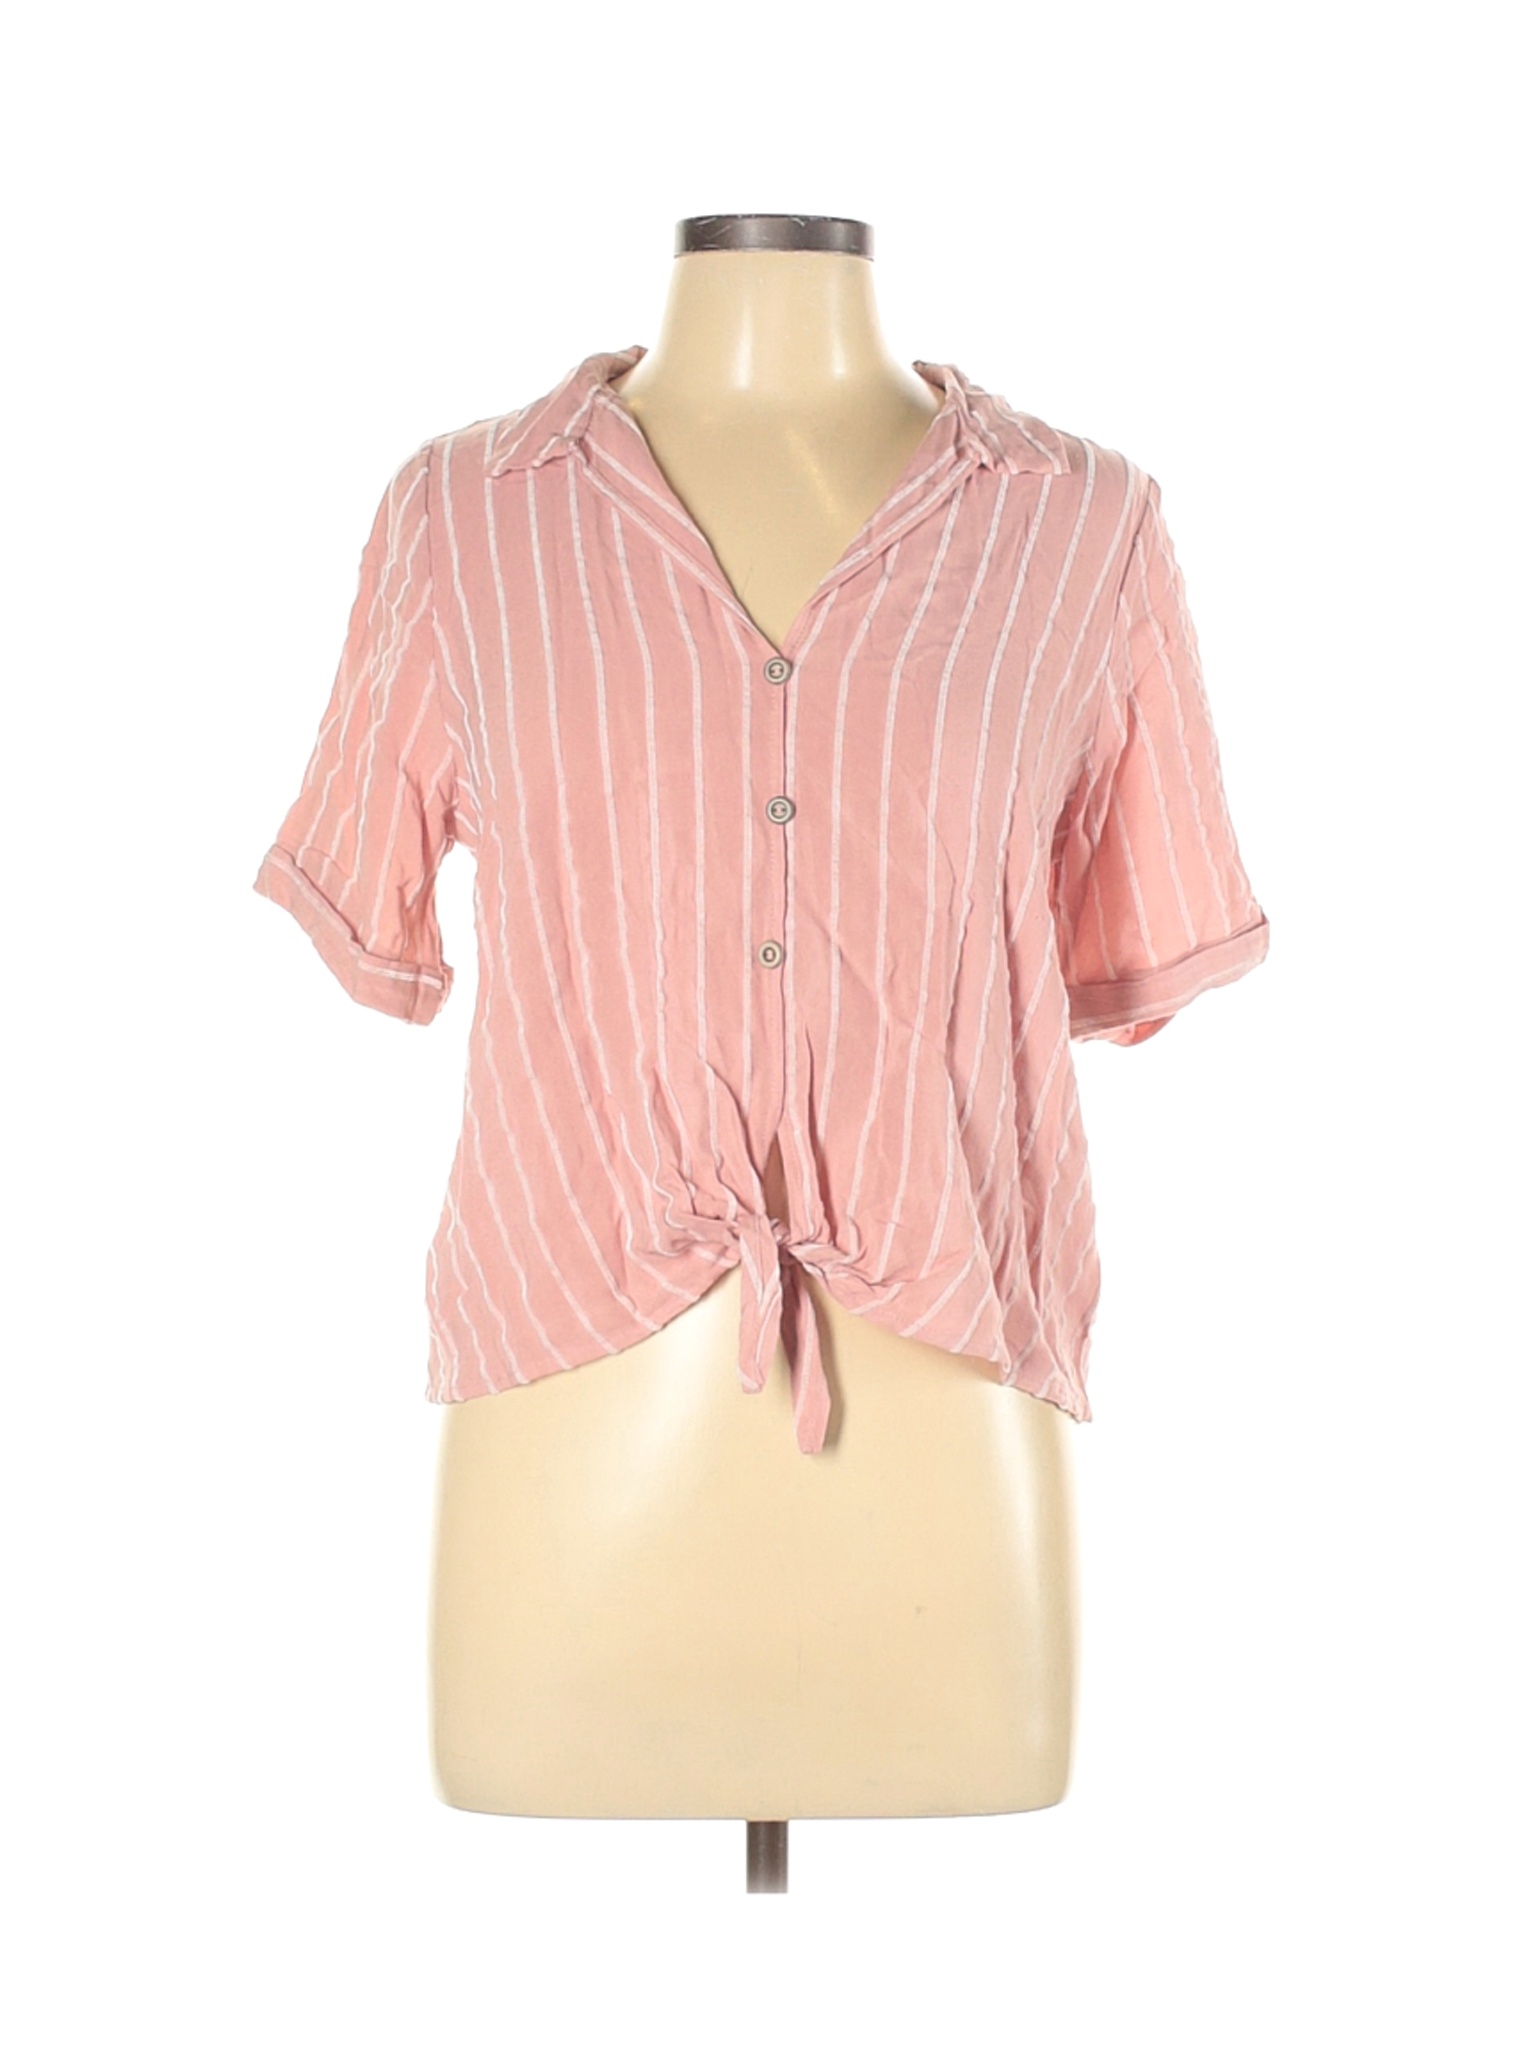 NWT Urban Romantics Women Pink Short Sleeve Blouse L | eBay